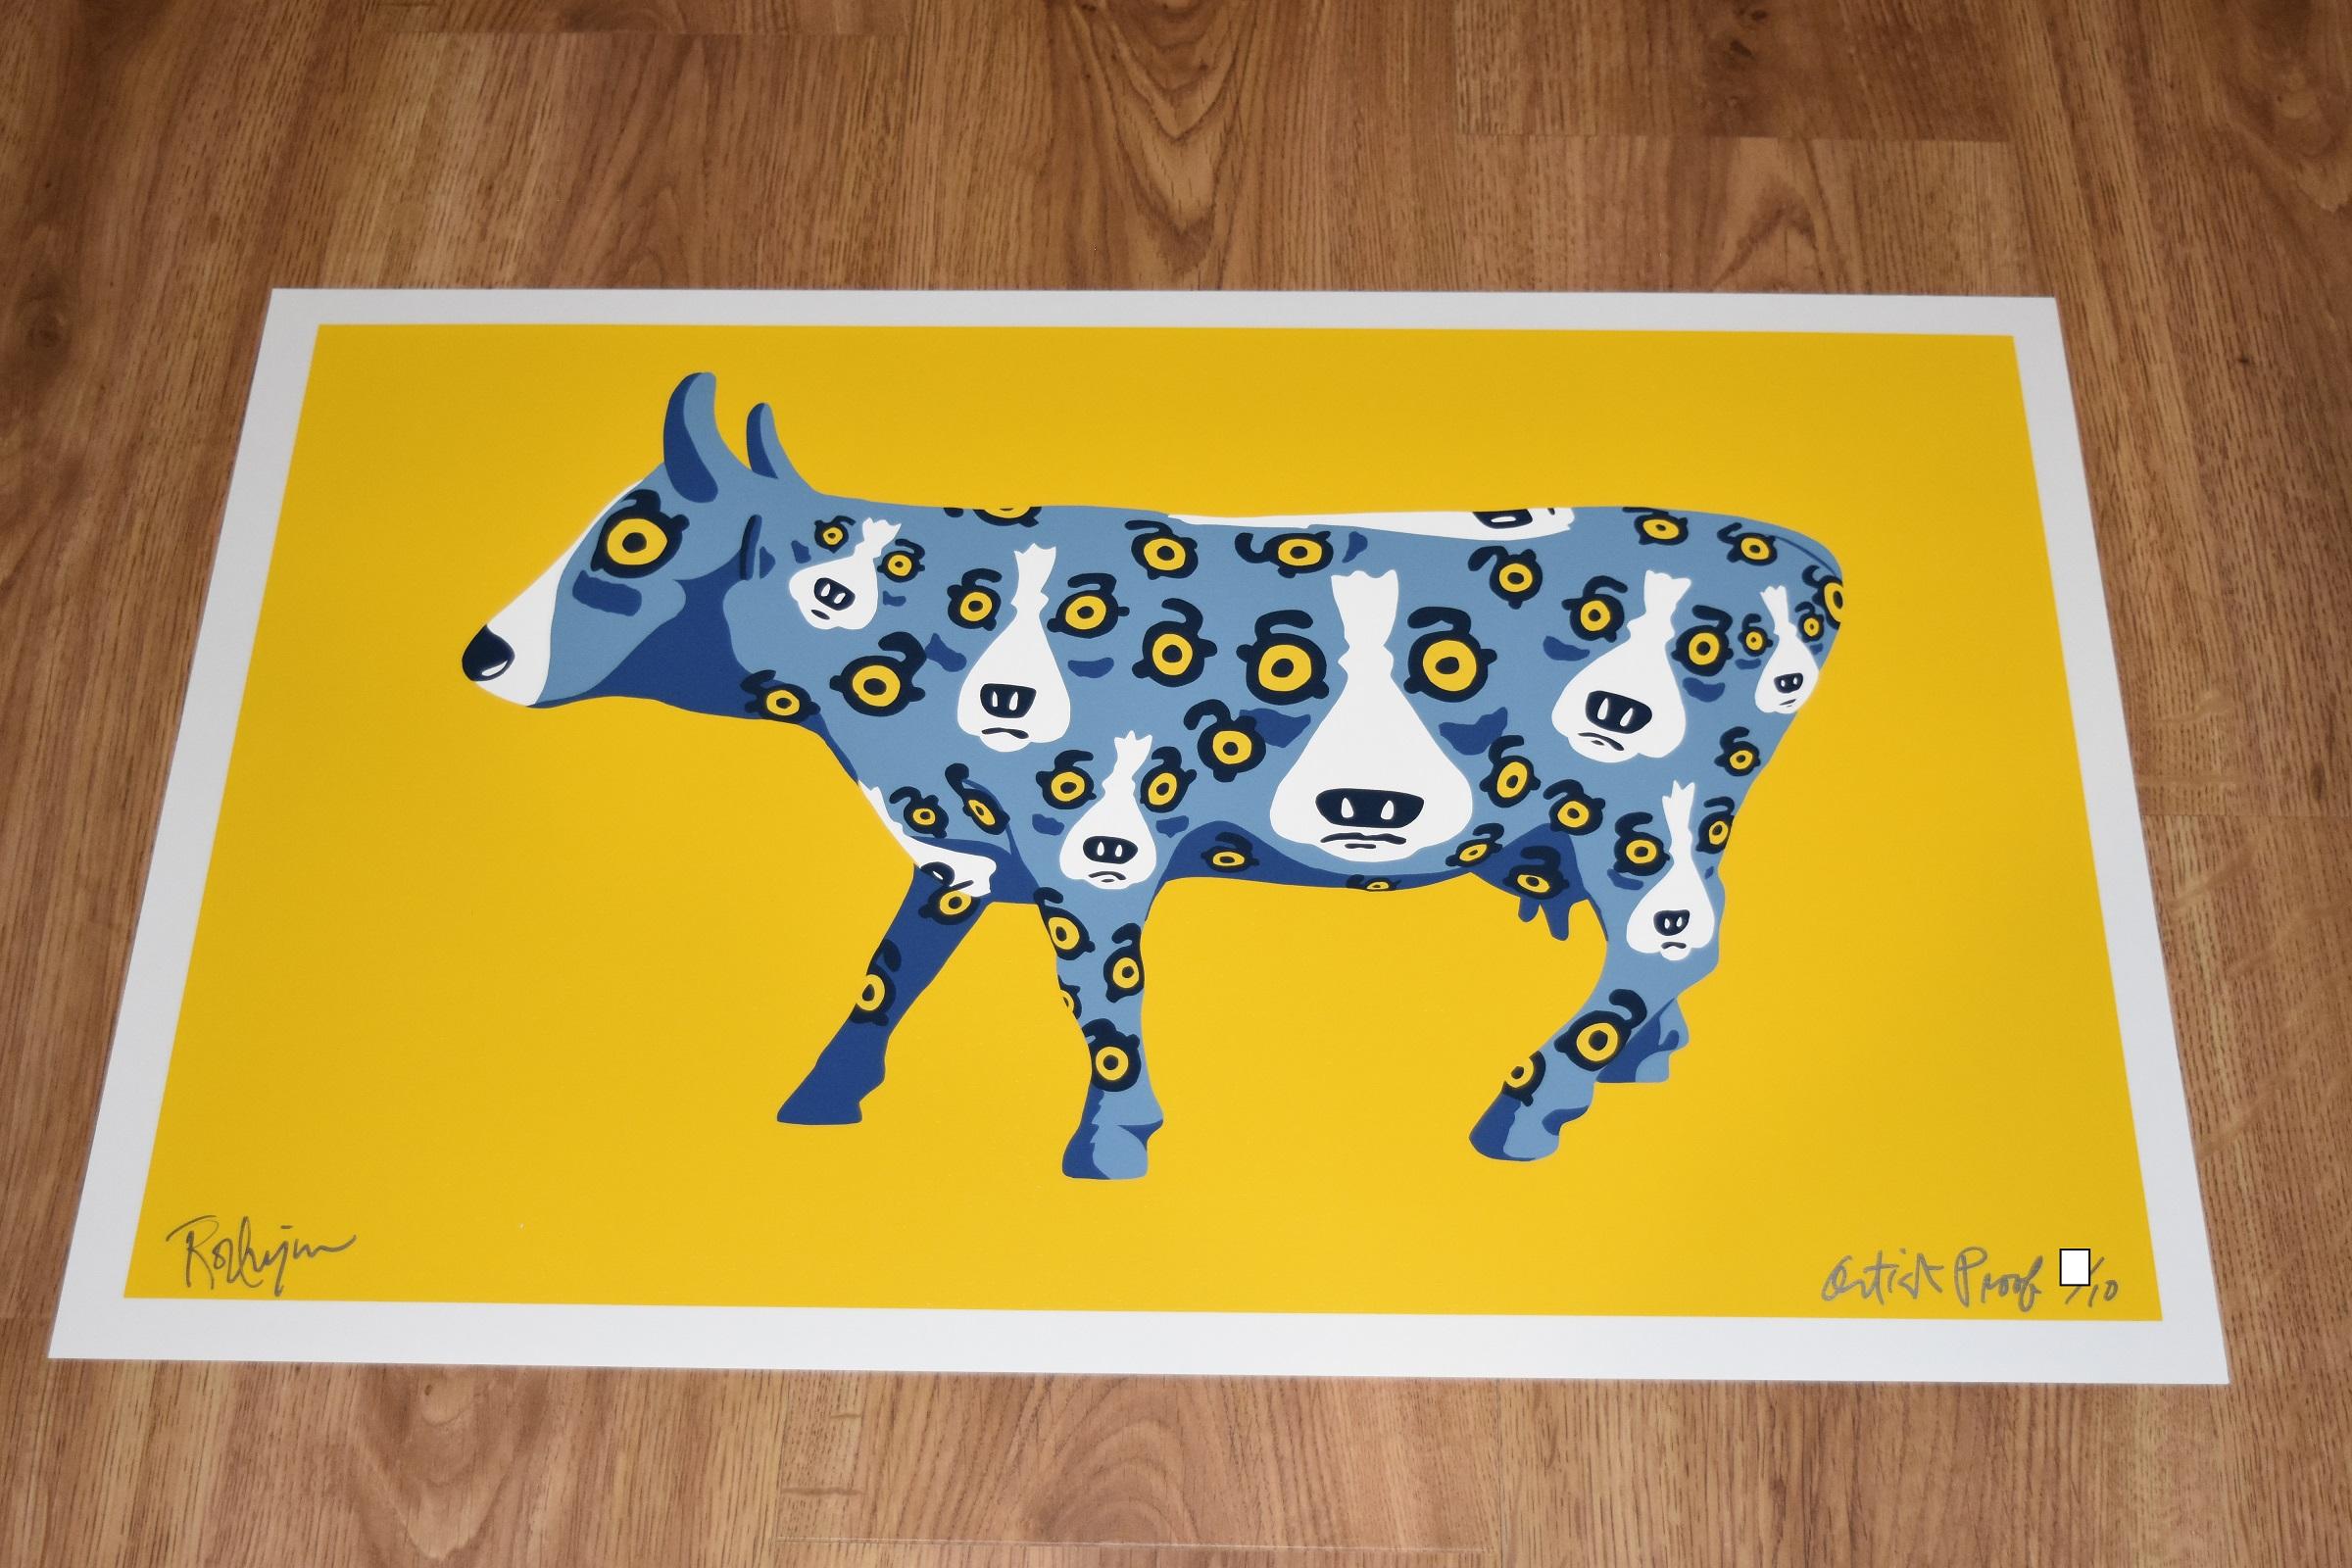 Artist:  George Rodrigue
Title:  Blue Dog “Walkin' Across Texas - Yellow”
Medium:  Silkscreen 
Date:  1999
Edition:  Printers Proof
Dimensions:  20 X 33”
Description:  Signed & Unframed
Condition:  Excellent 
